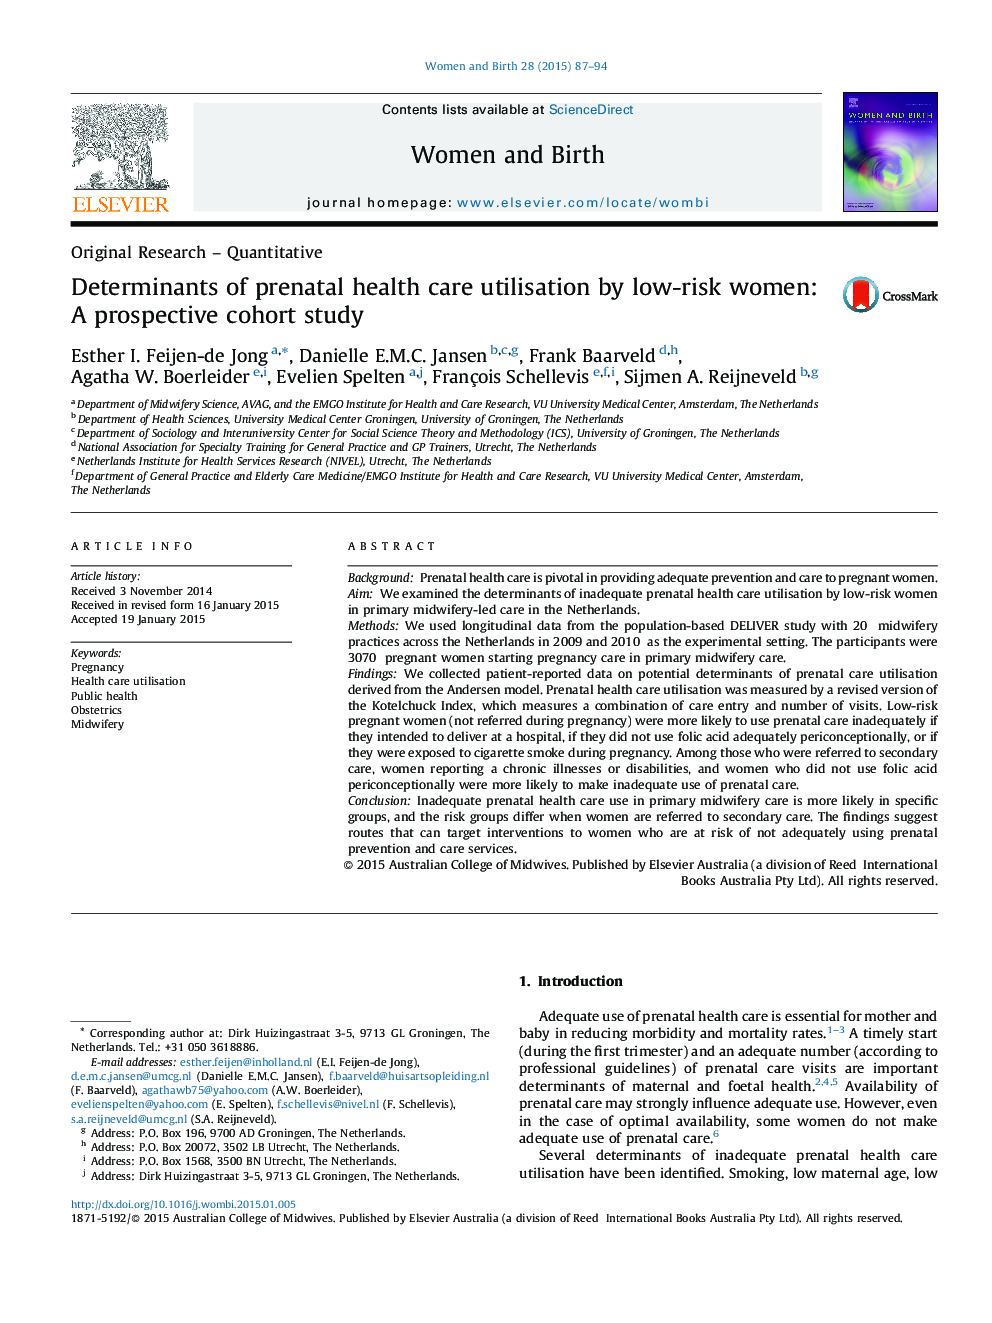 Determinants of prenatal health care utilisation by low-risk women: A prospective cohort study